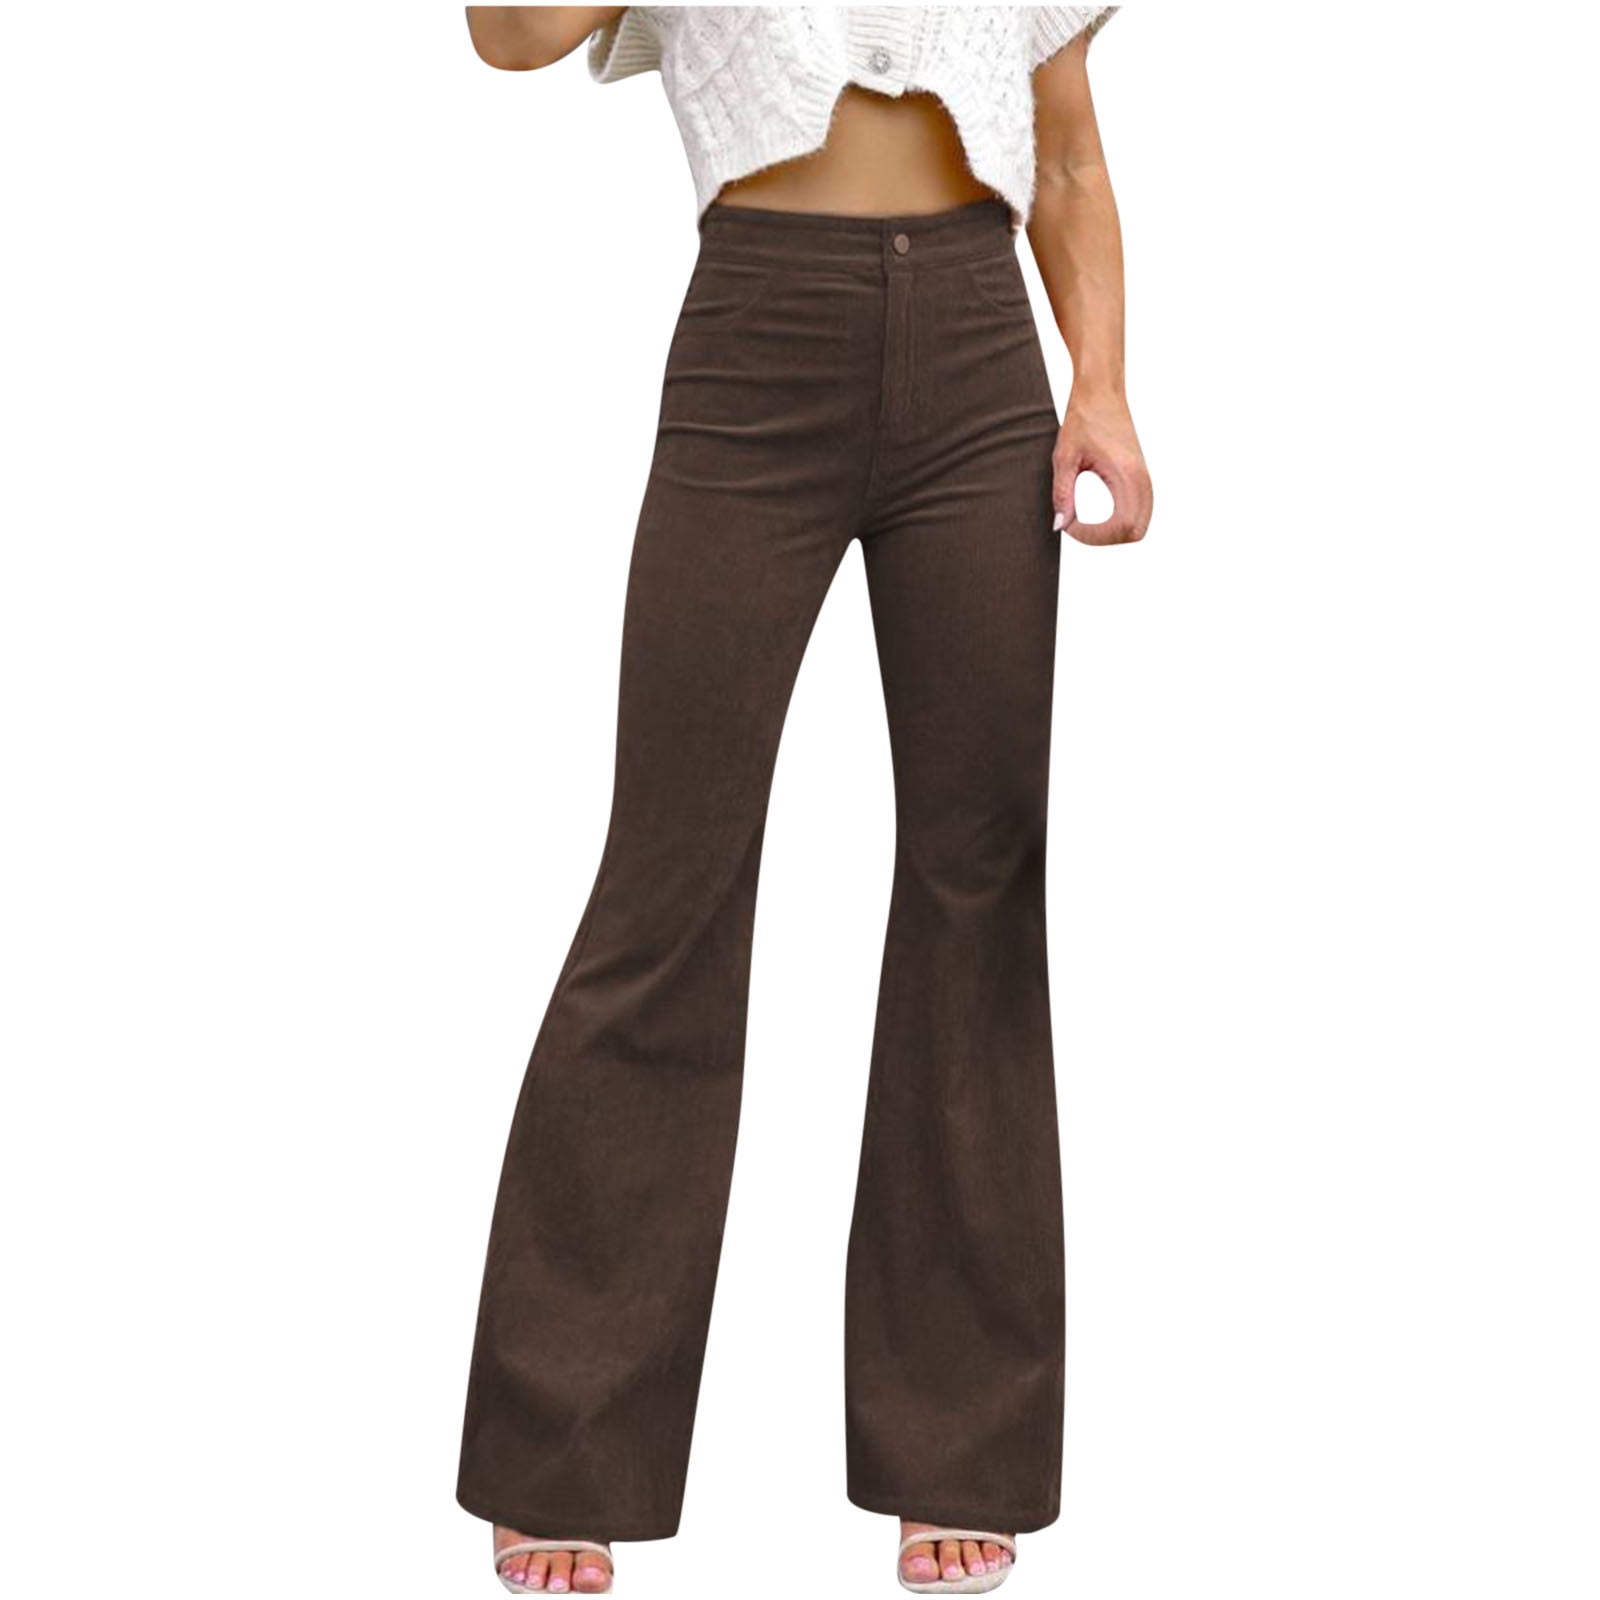 Hfyihgf Women Elegant Corduroy Flare Pants Elastic High Waist Vintage Bell  Bottom Trousers with Pockets(Purple,S) 